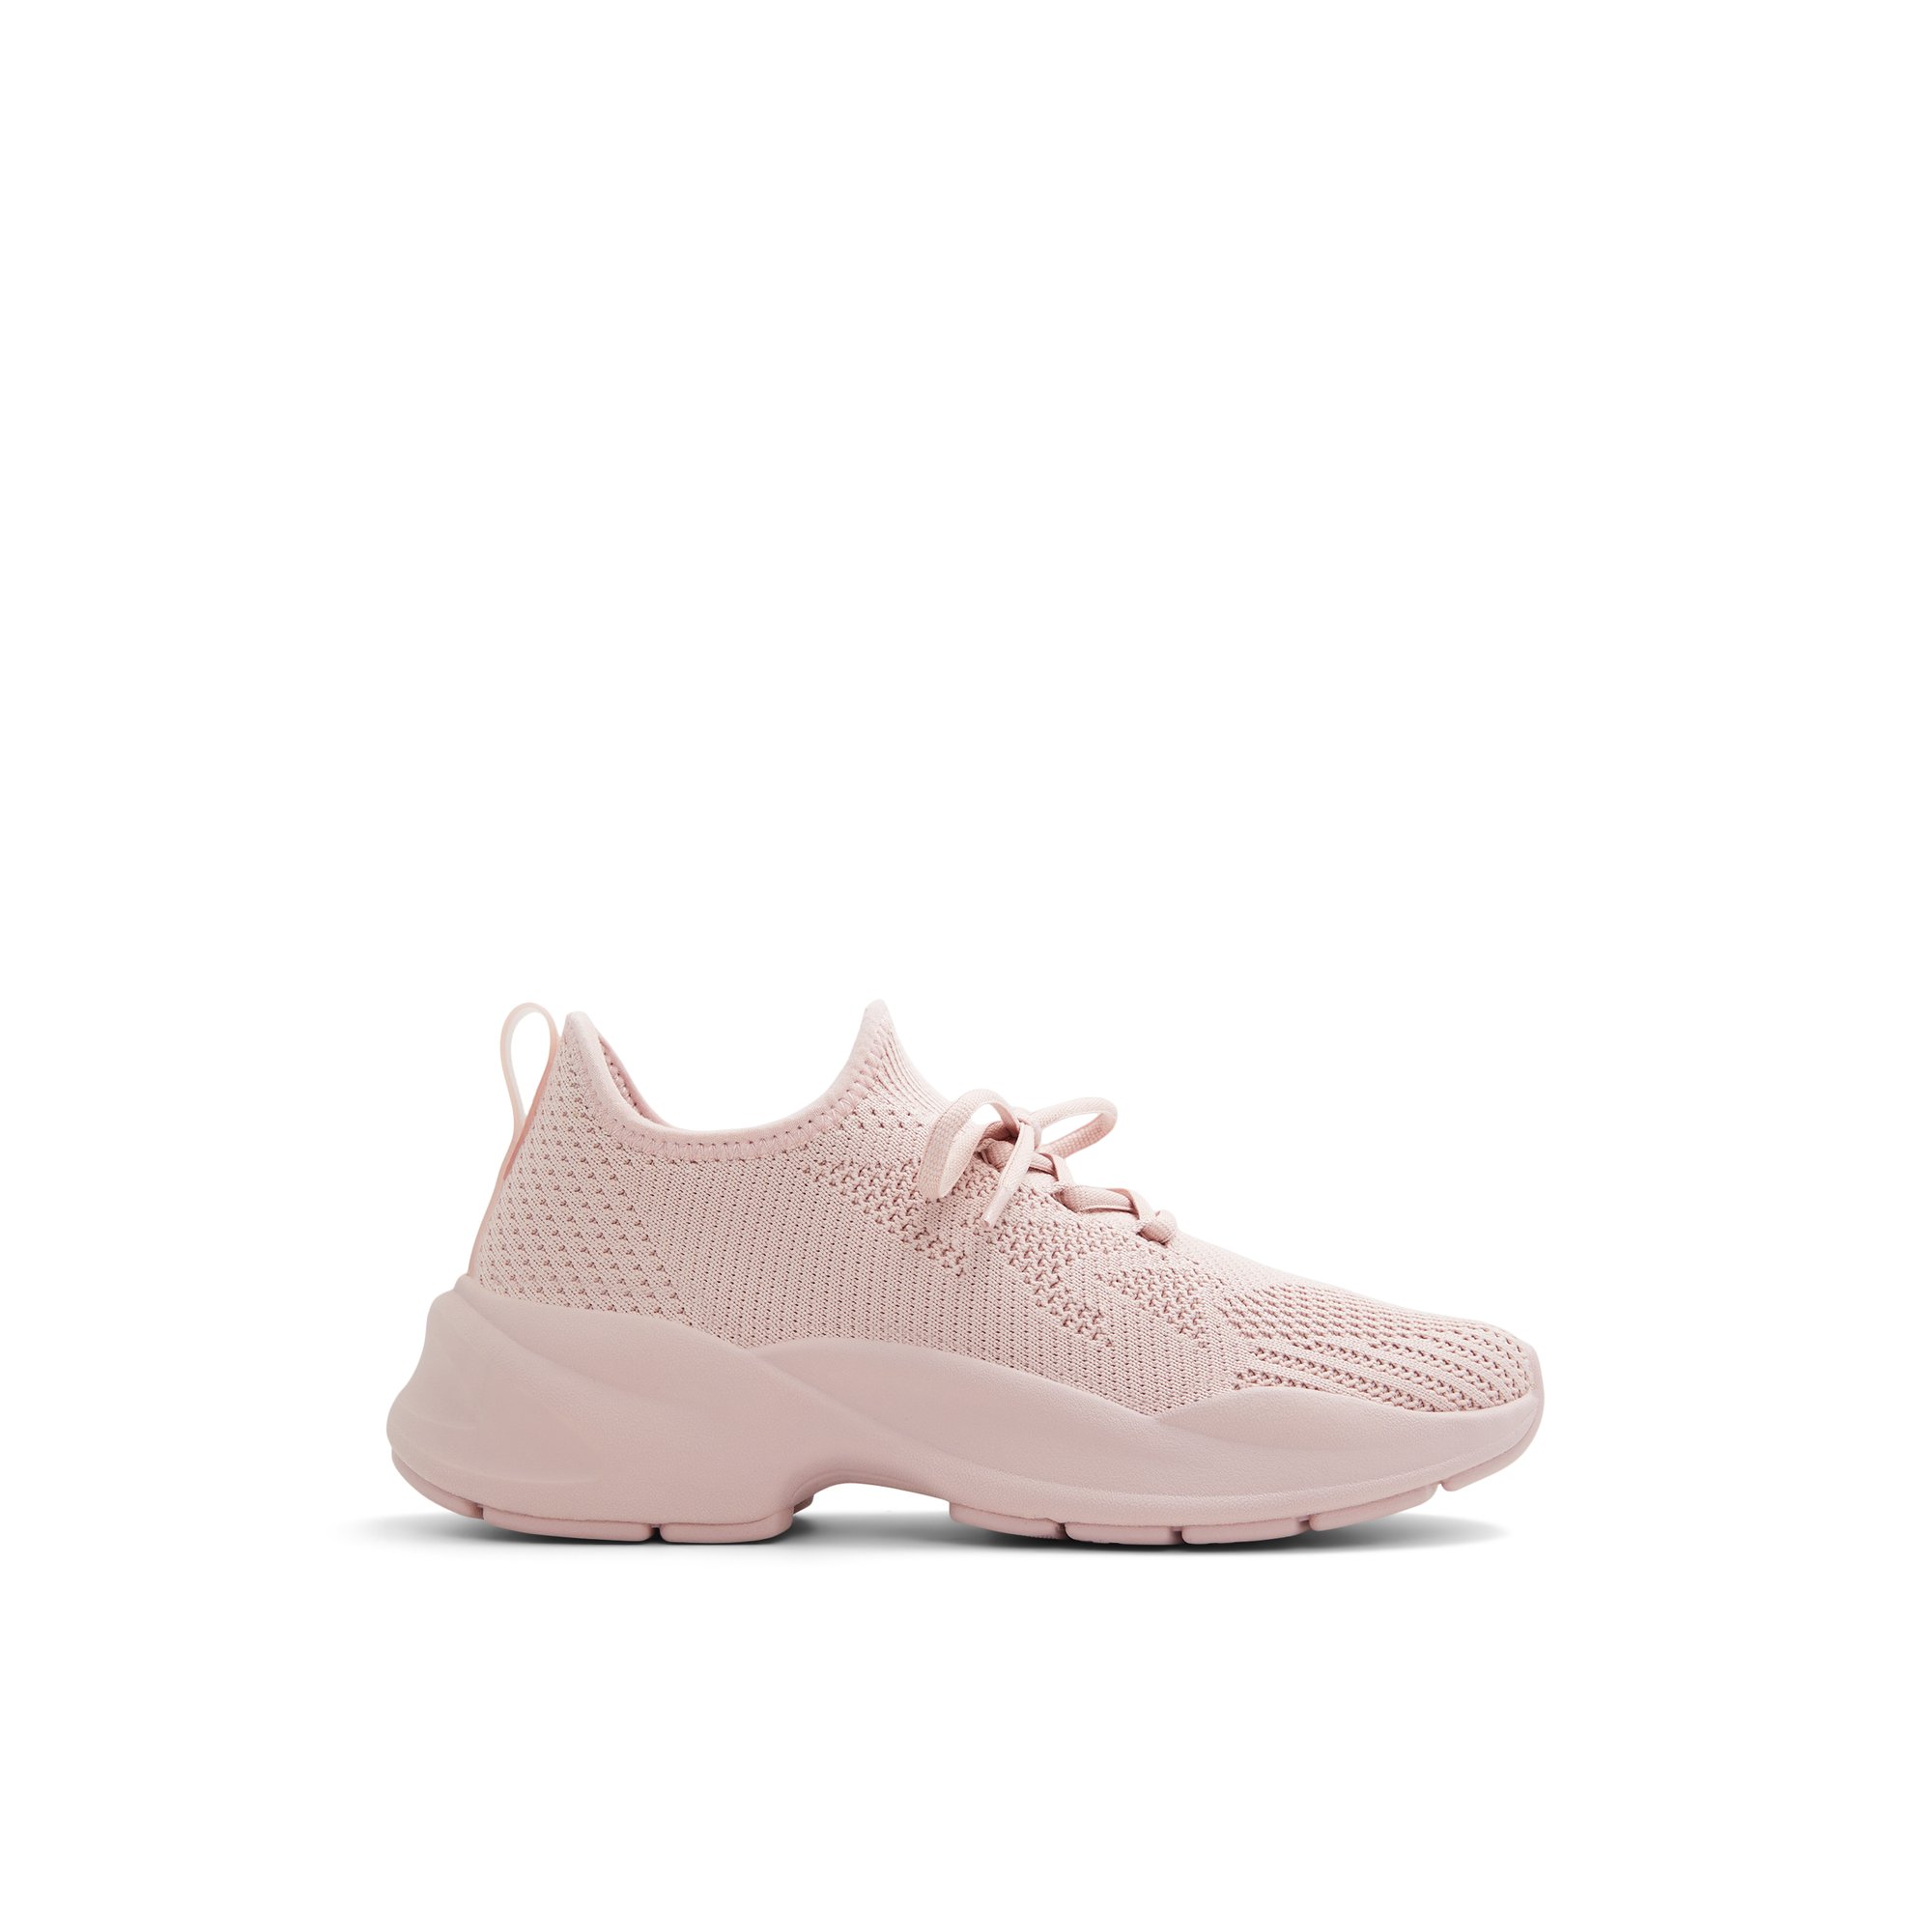 ALDO Allday - Women's Athletic Sneaker Sneakers - Pink